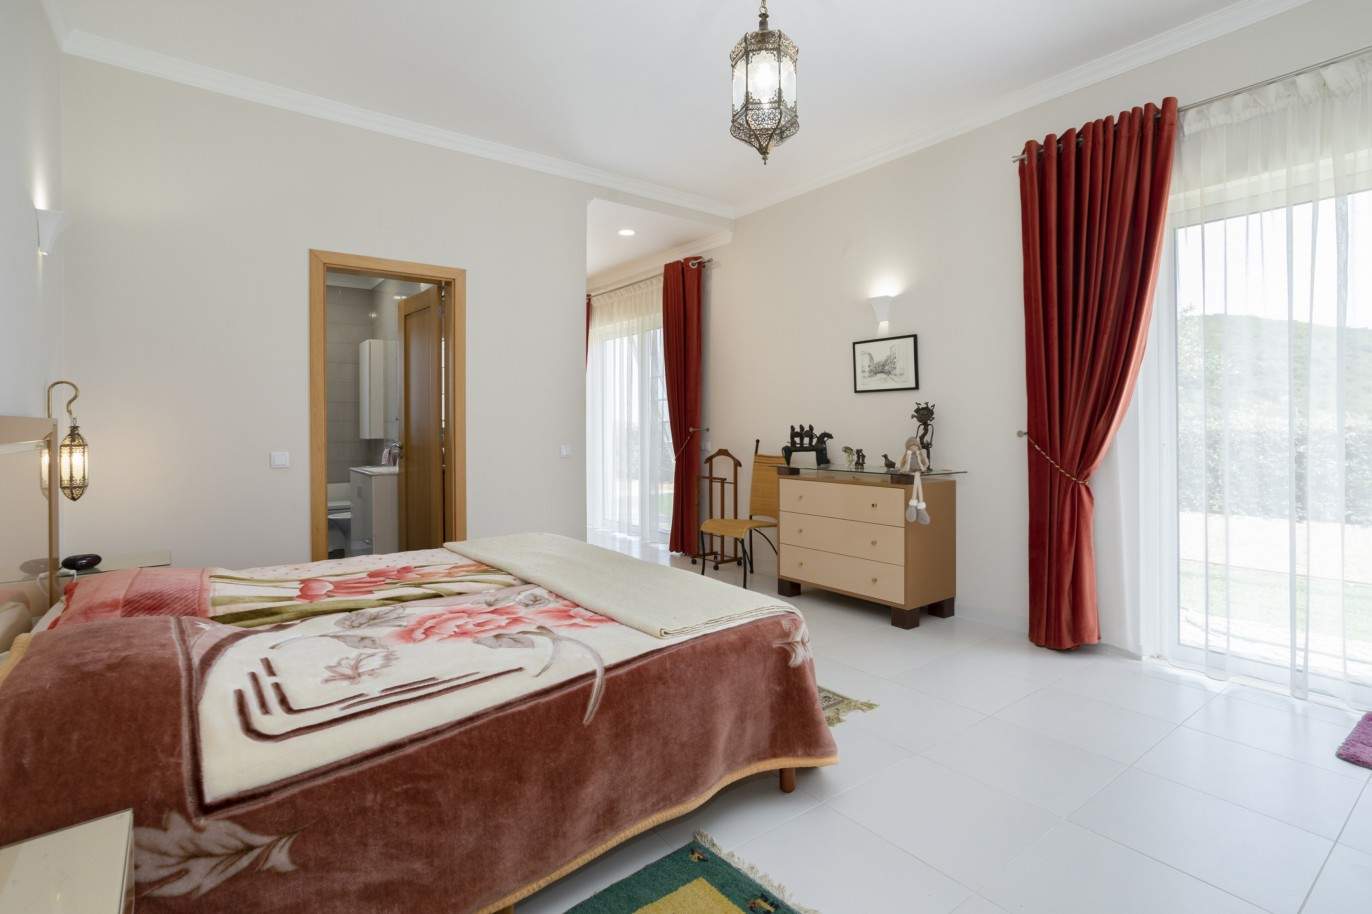 3 Bedroom Villa with swimming pool, for sale in Estoi, Algarve_201374